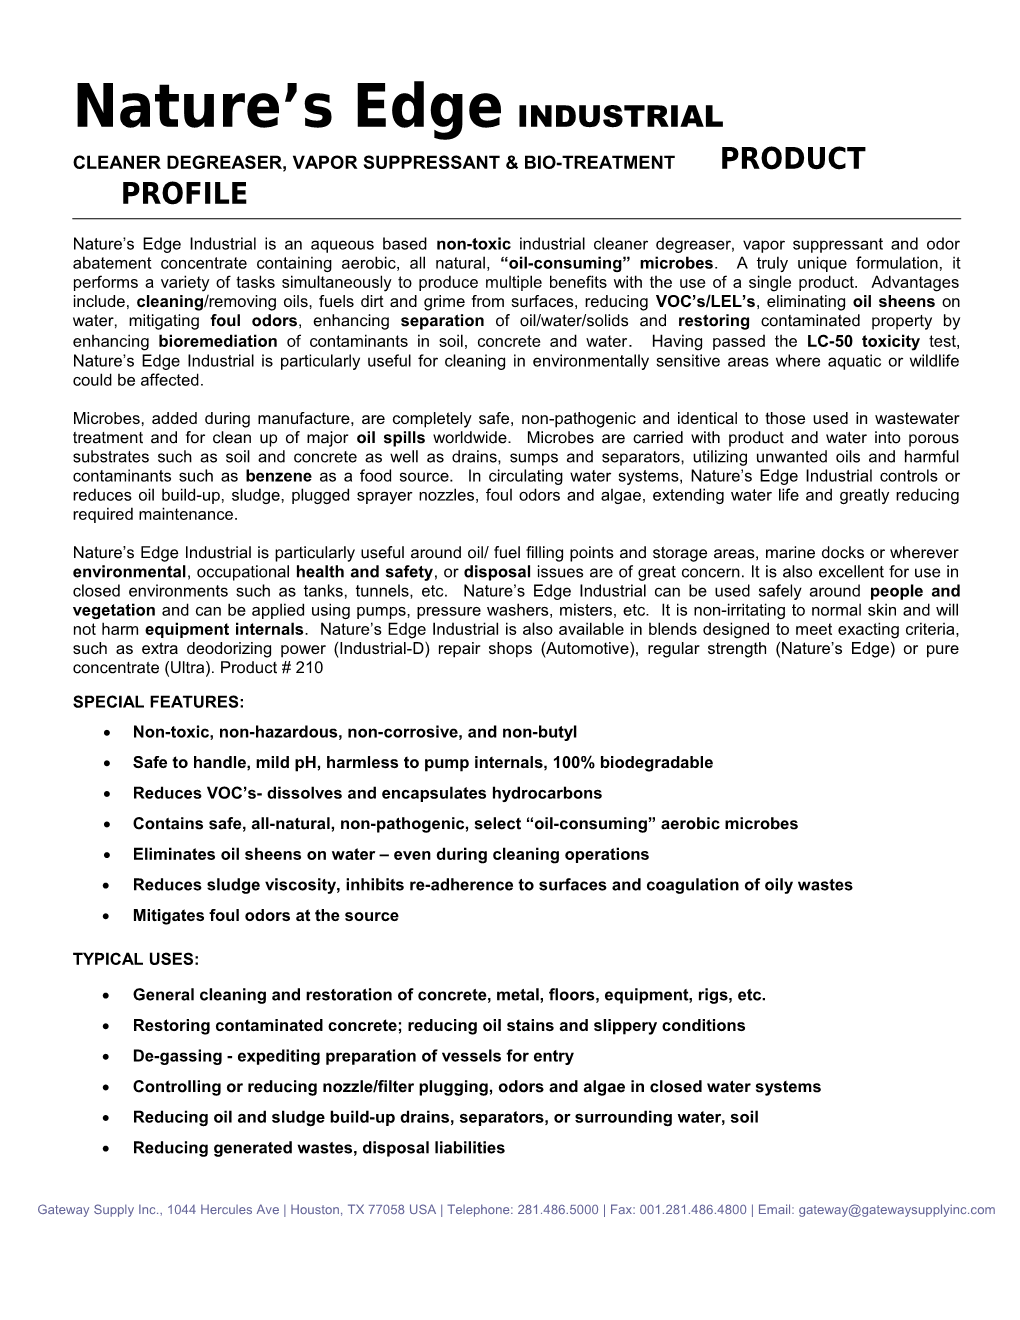 Cleaner Degreaser, Vapor Suppressant & Bio-Treatment Product Profile